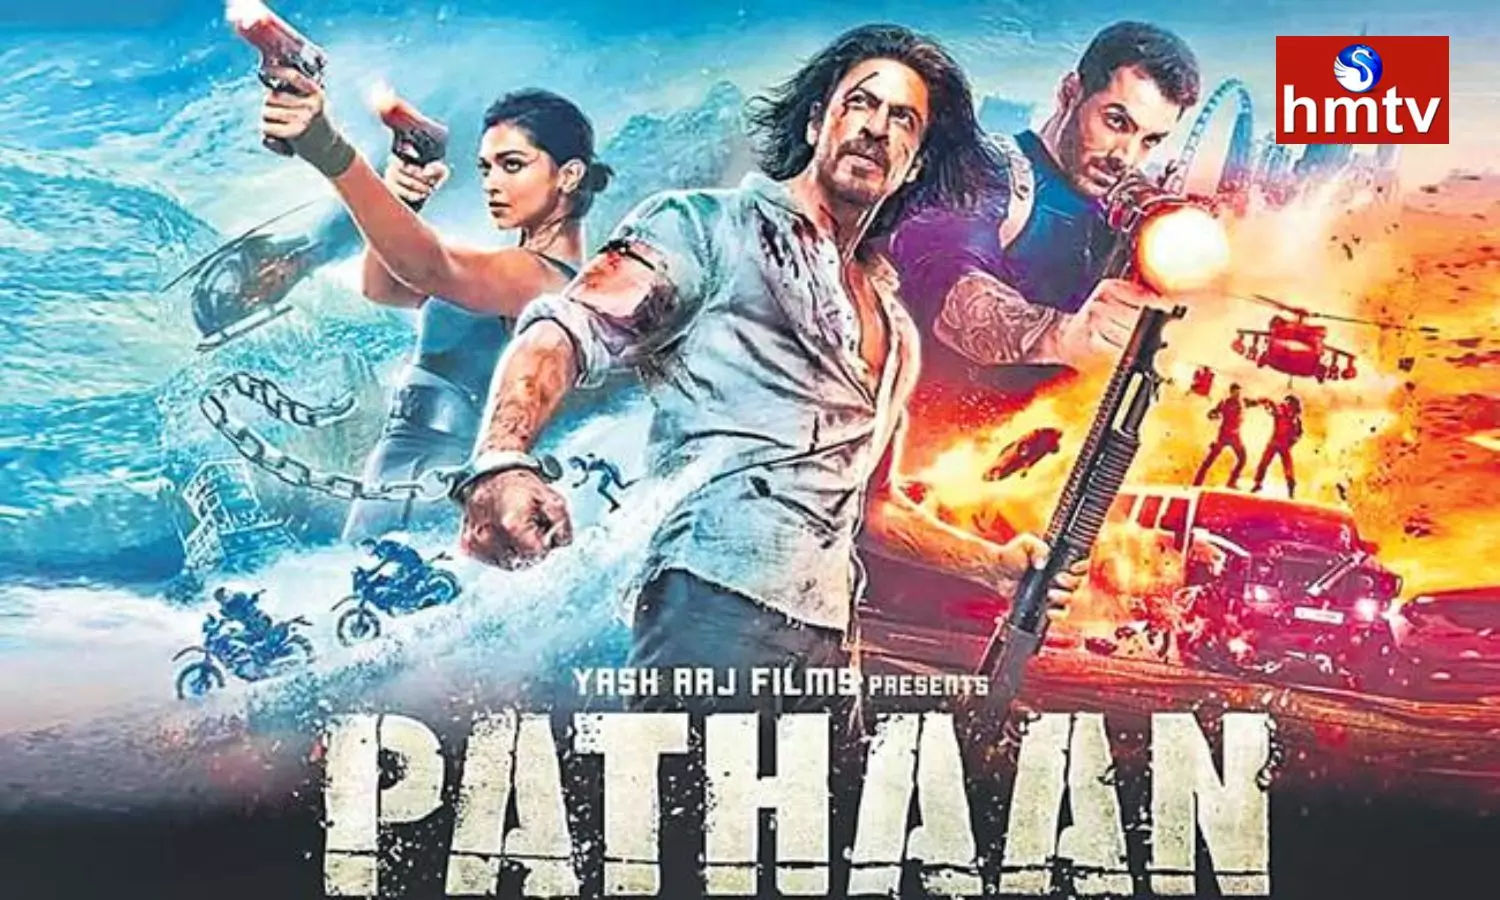 Shah Rukh Khan’s Blockbuster Movie Pathaan Enters Rs 1000 Crore Club